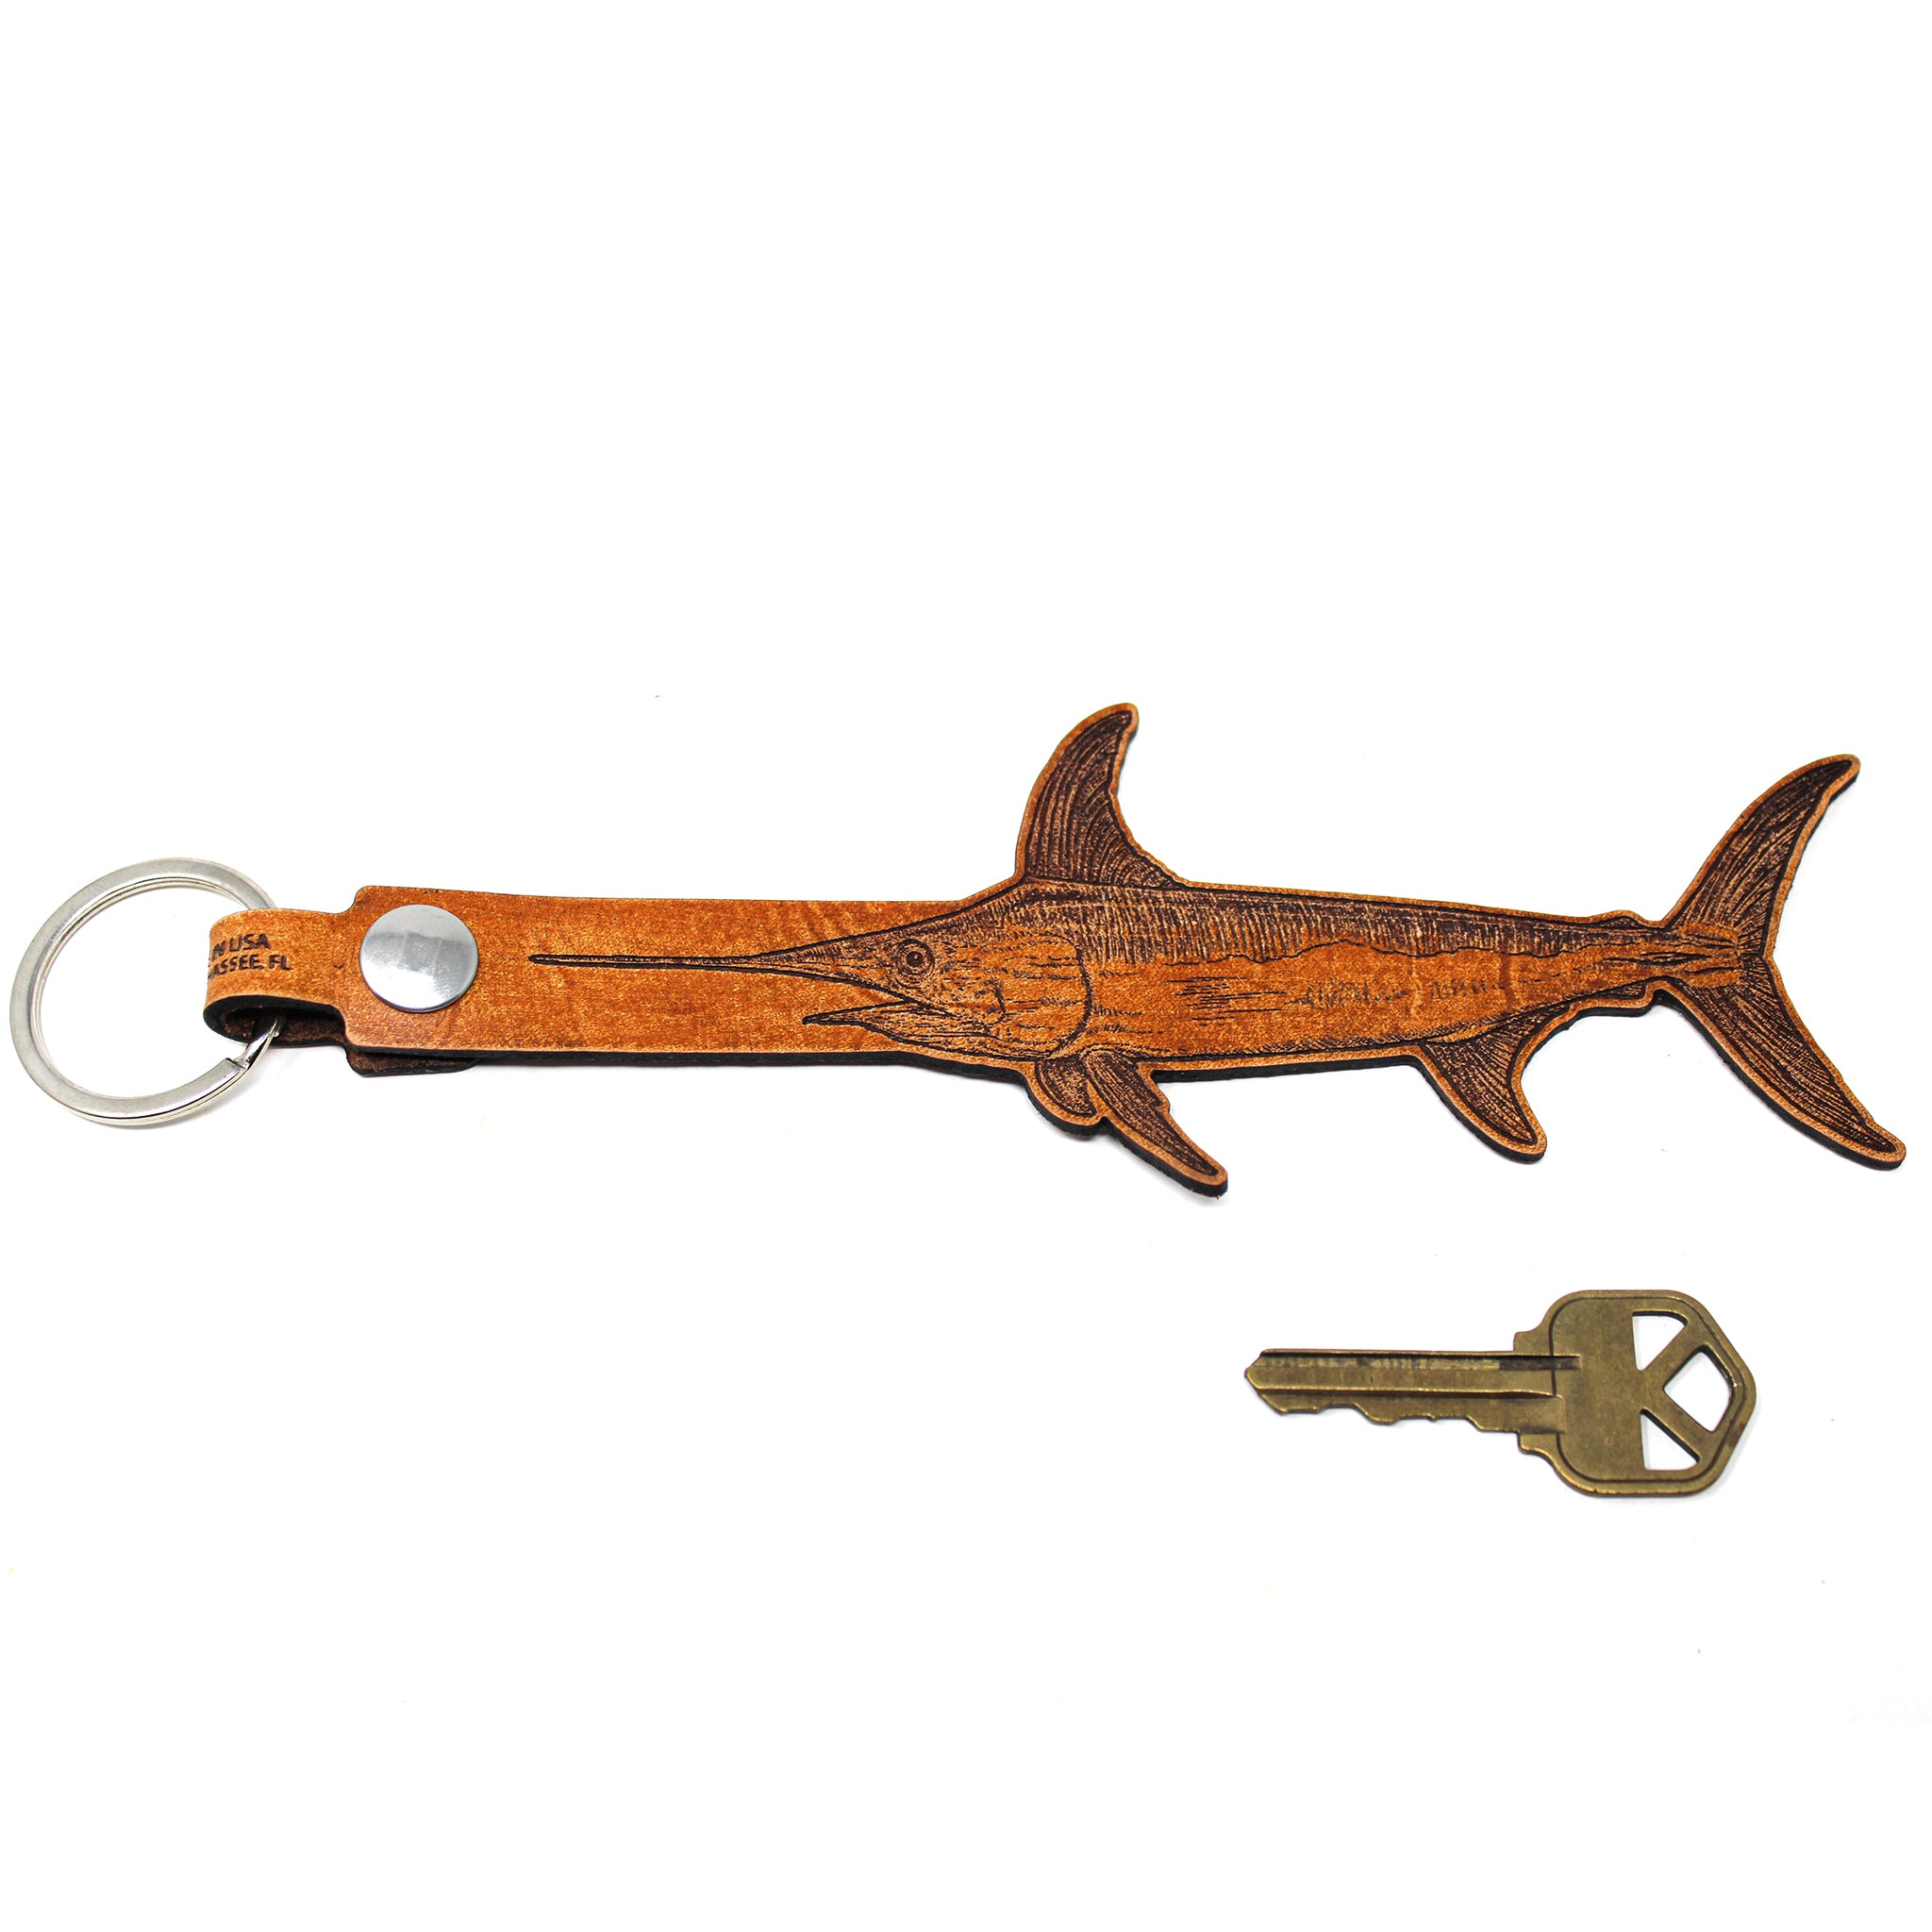 Leather Keychain - Large Swordfish Keychain